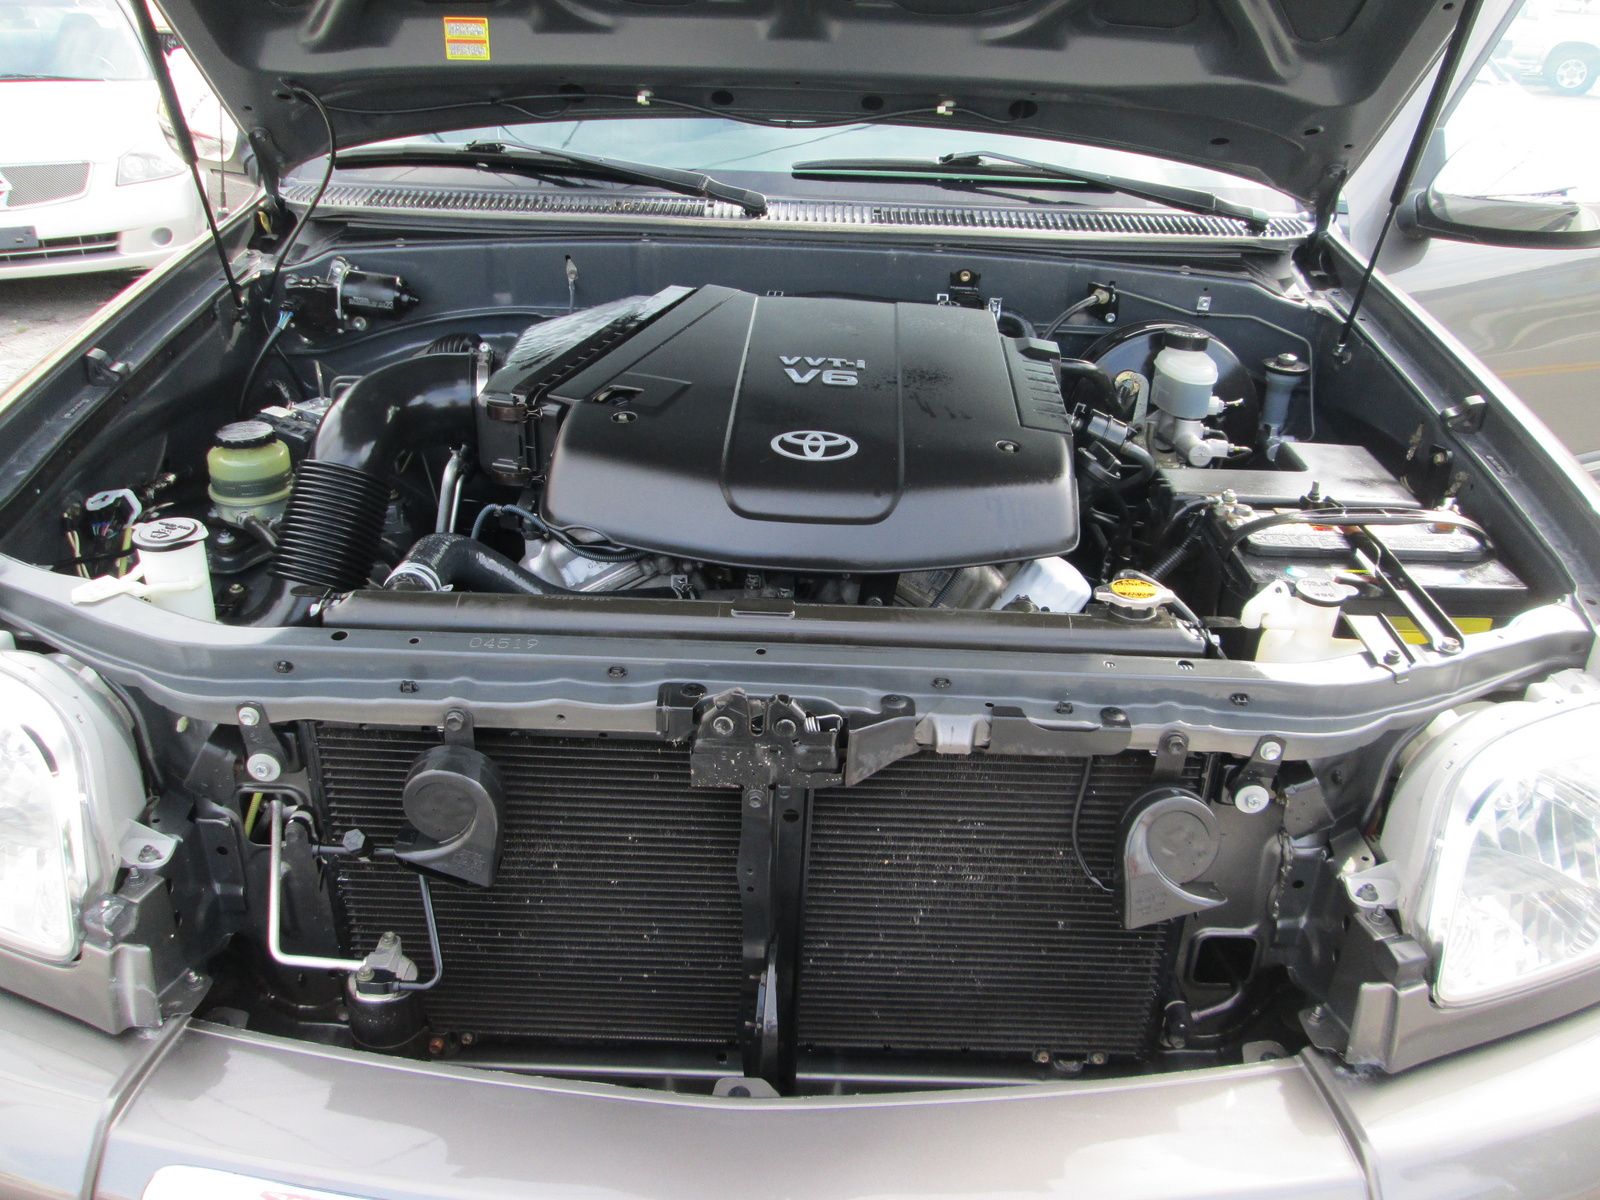 2006 Toyota tundra engine specs